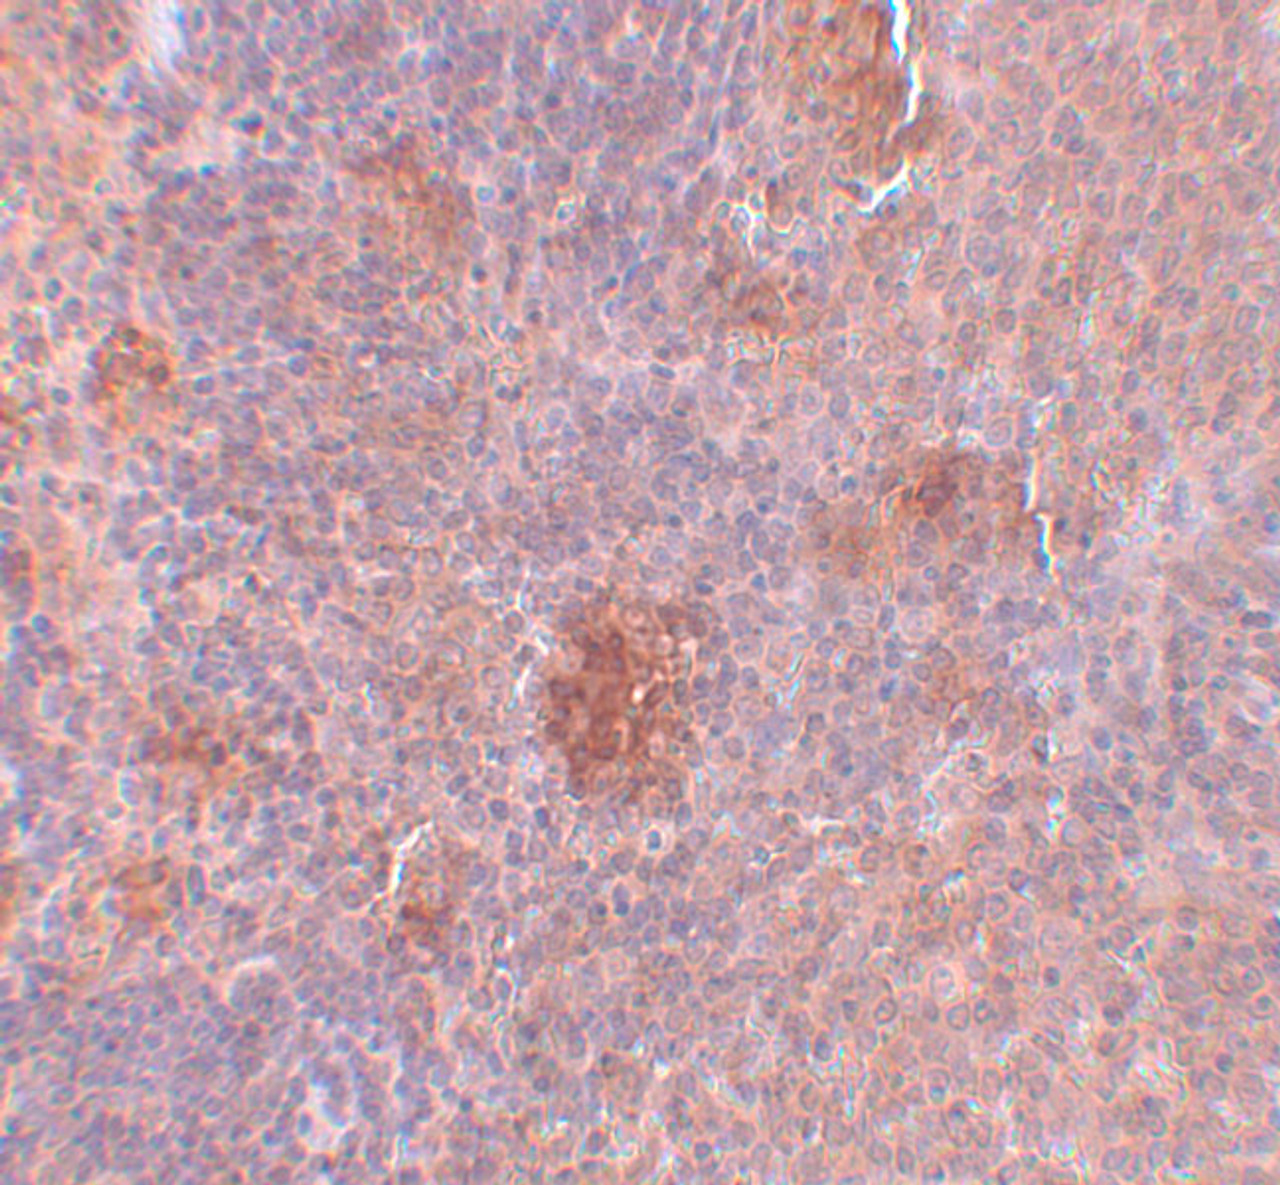 Immunohistochemistry of Slc37A2 in rat spleen tissue with Slc37A2 antibody at 5 ug/mL.